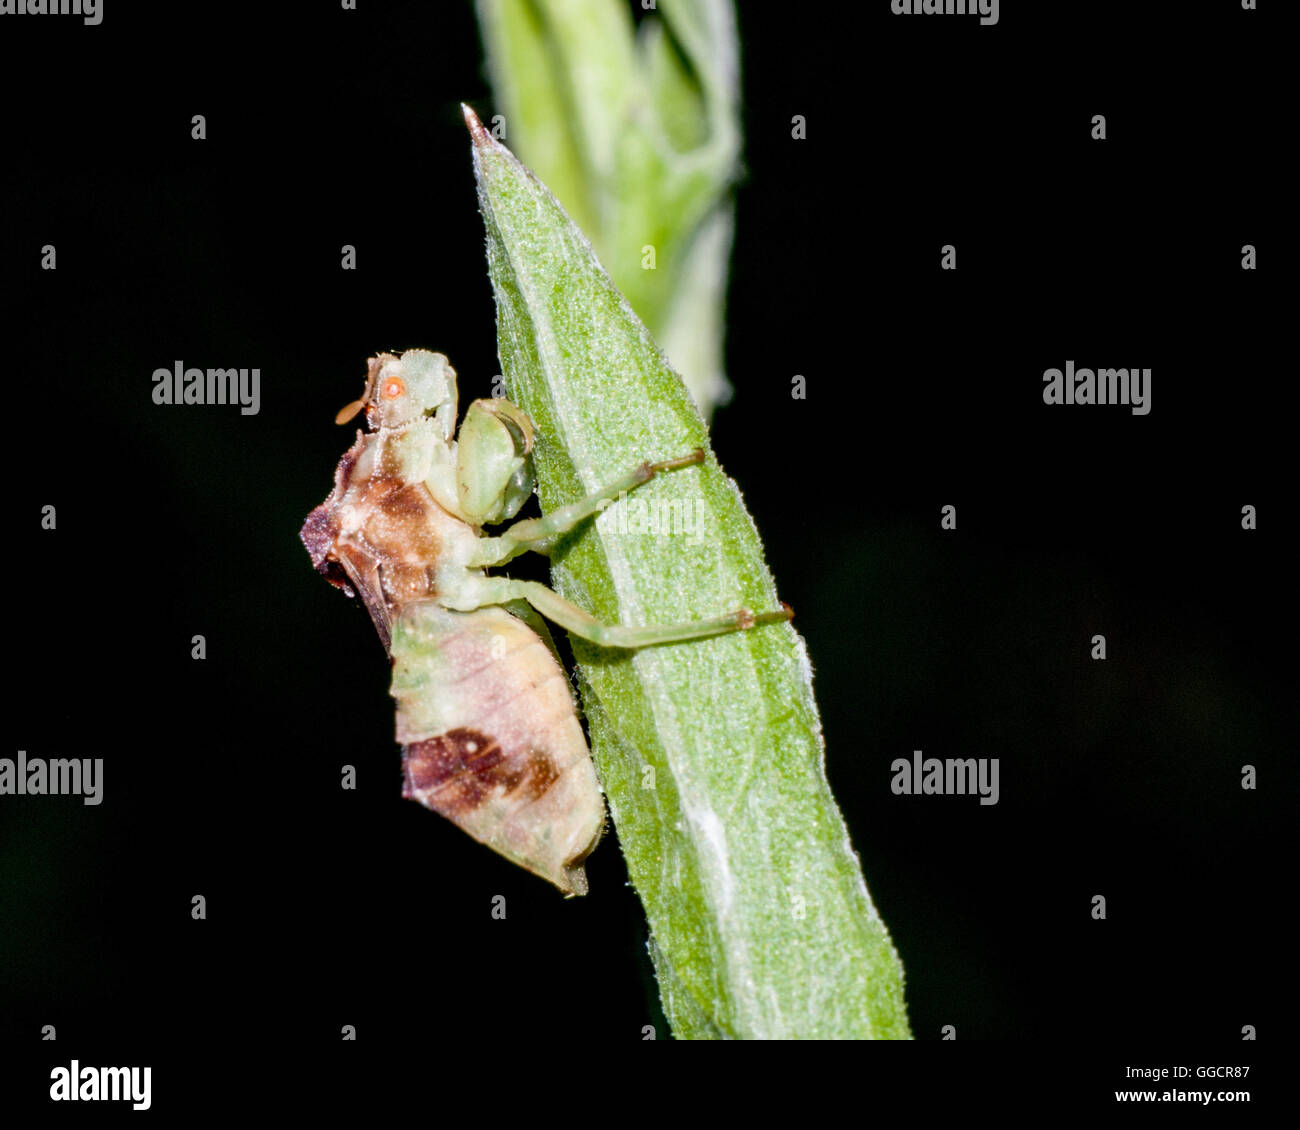 An Ambush Bug perched on a plant stem. Stock Photo